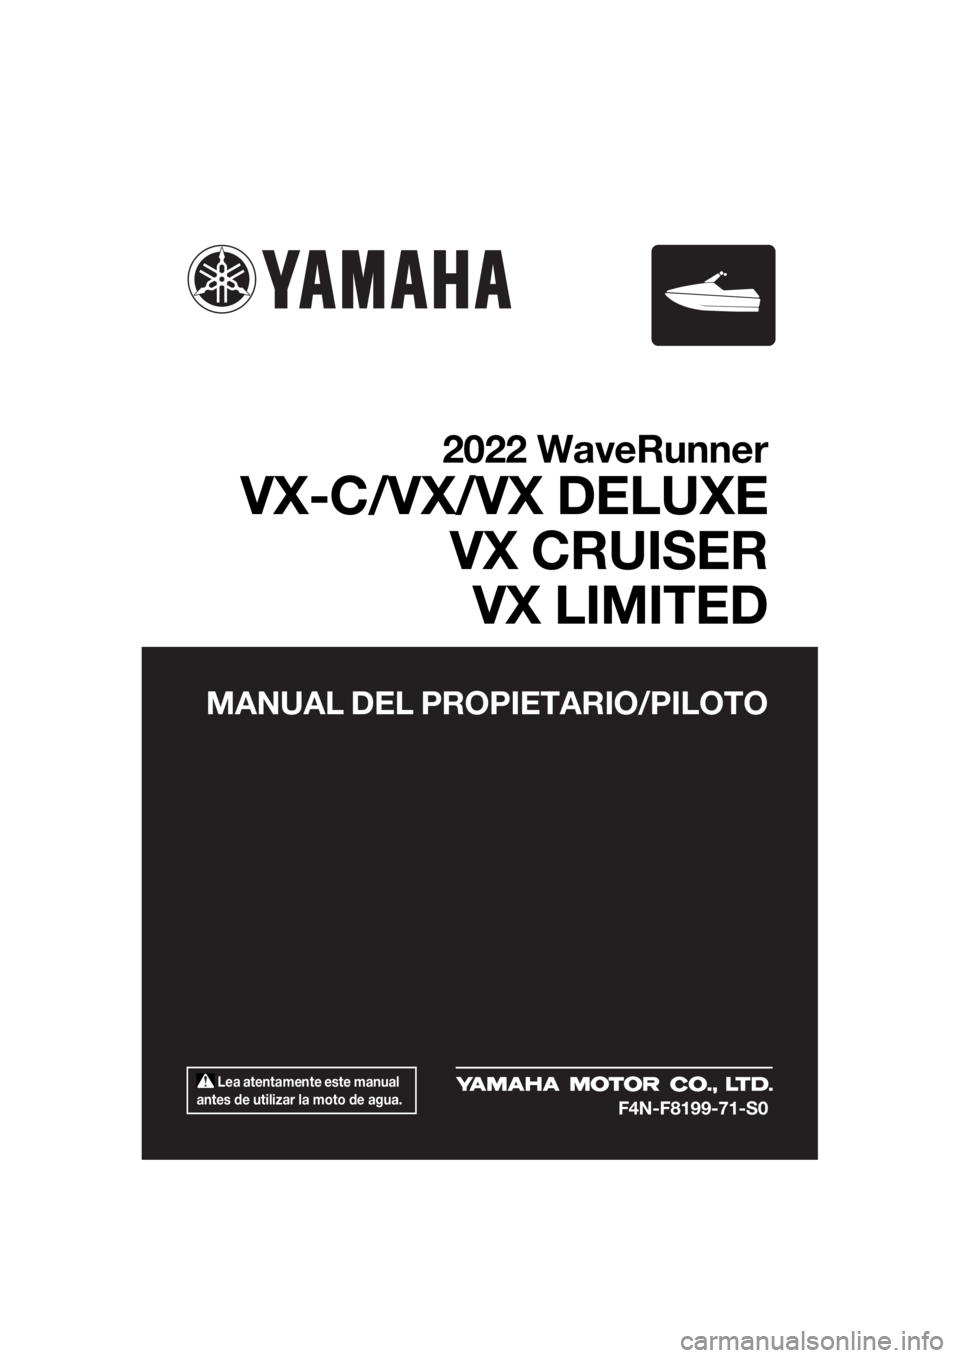 YAMAHA VX LIMITED 2022  Manuale de Empleo (in Spanish)  Lea atentamente este manual 
antes de utilizar la moto de agua.
MANUAL DEL PROPIETARIO/PILOTO
2022 WaveRunner
VX-C/VX/VX DELUXE VX CRUISERVX LIMITED
F4N-F8199-71-S0
UF4N71S0.book  Page 1  Thursday, A